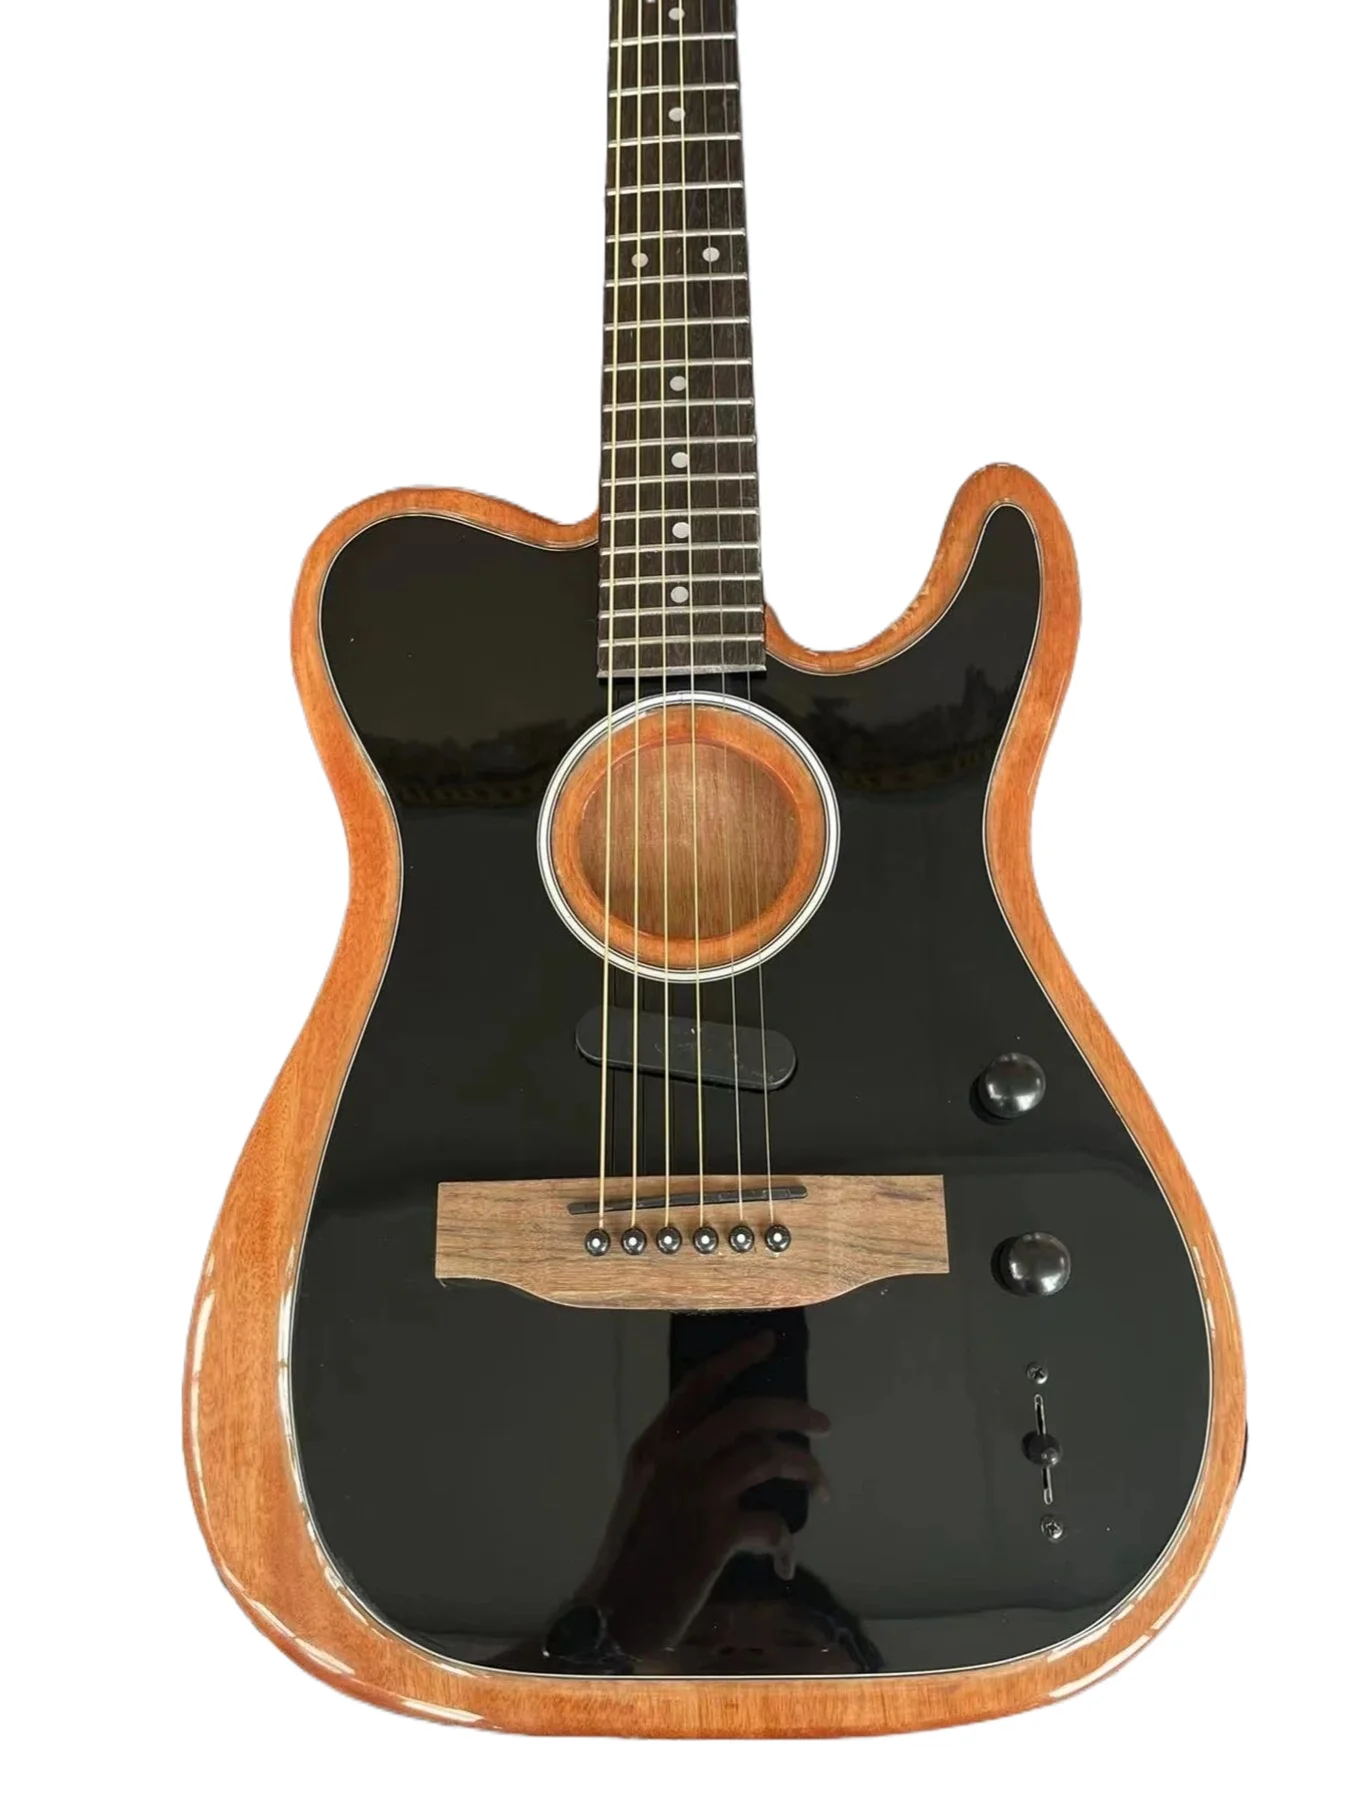 

Black face bobbin Electric guitar, upgraded cartridge, super beautiful in kind, supports customization